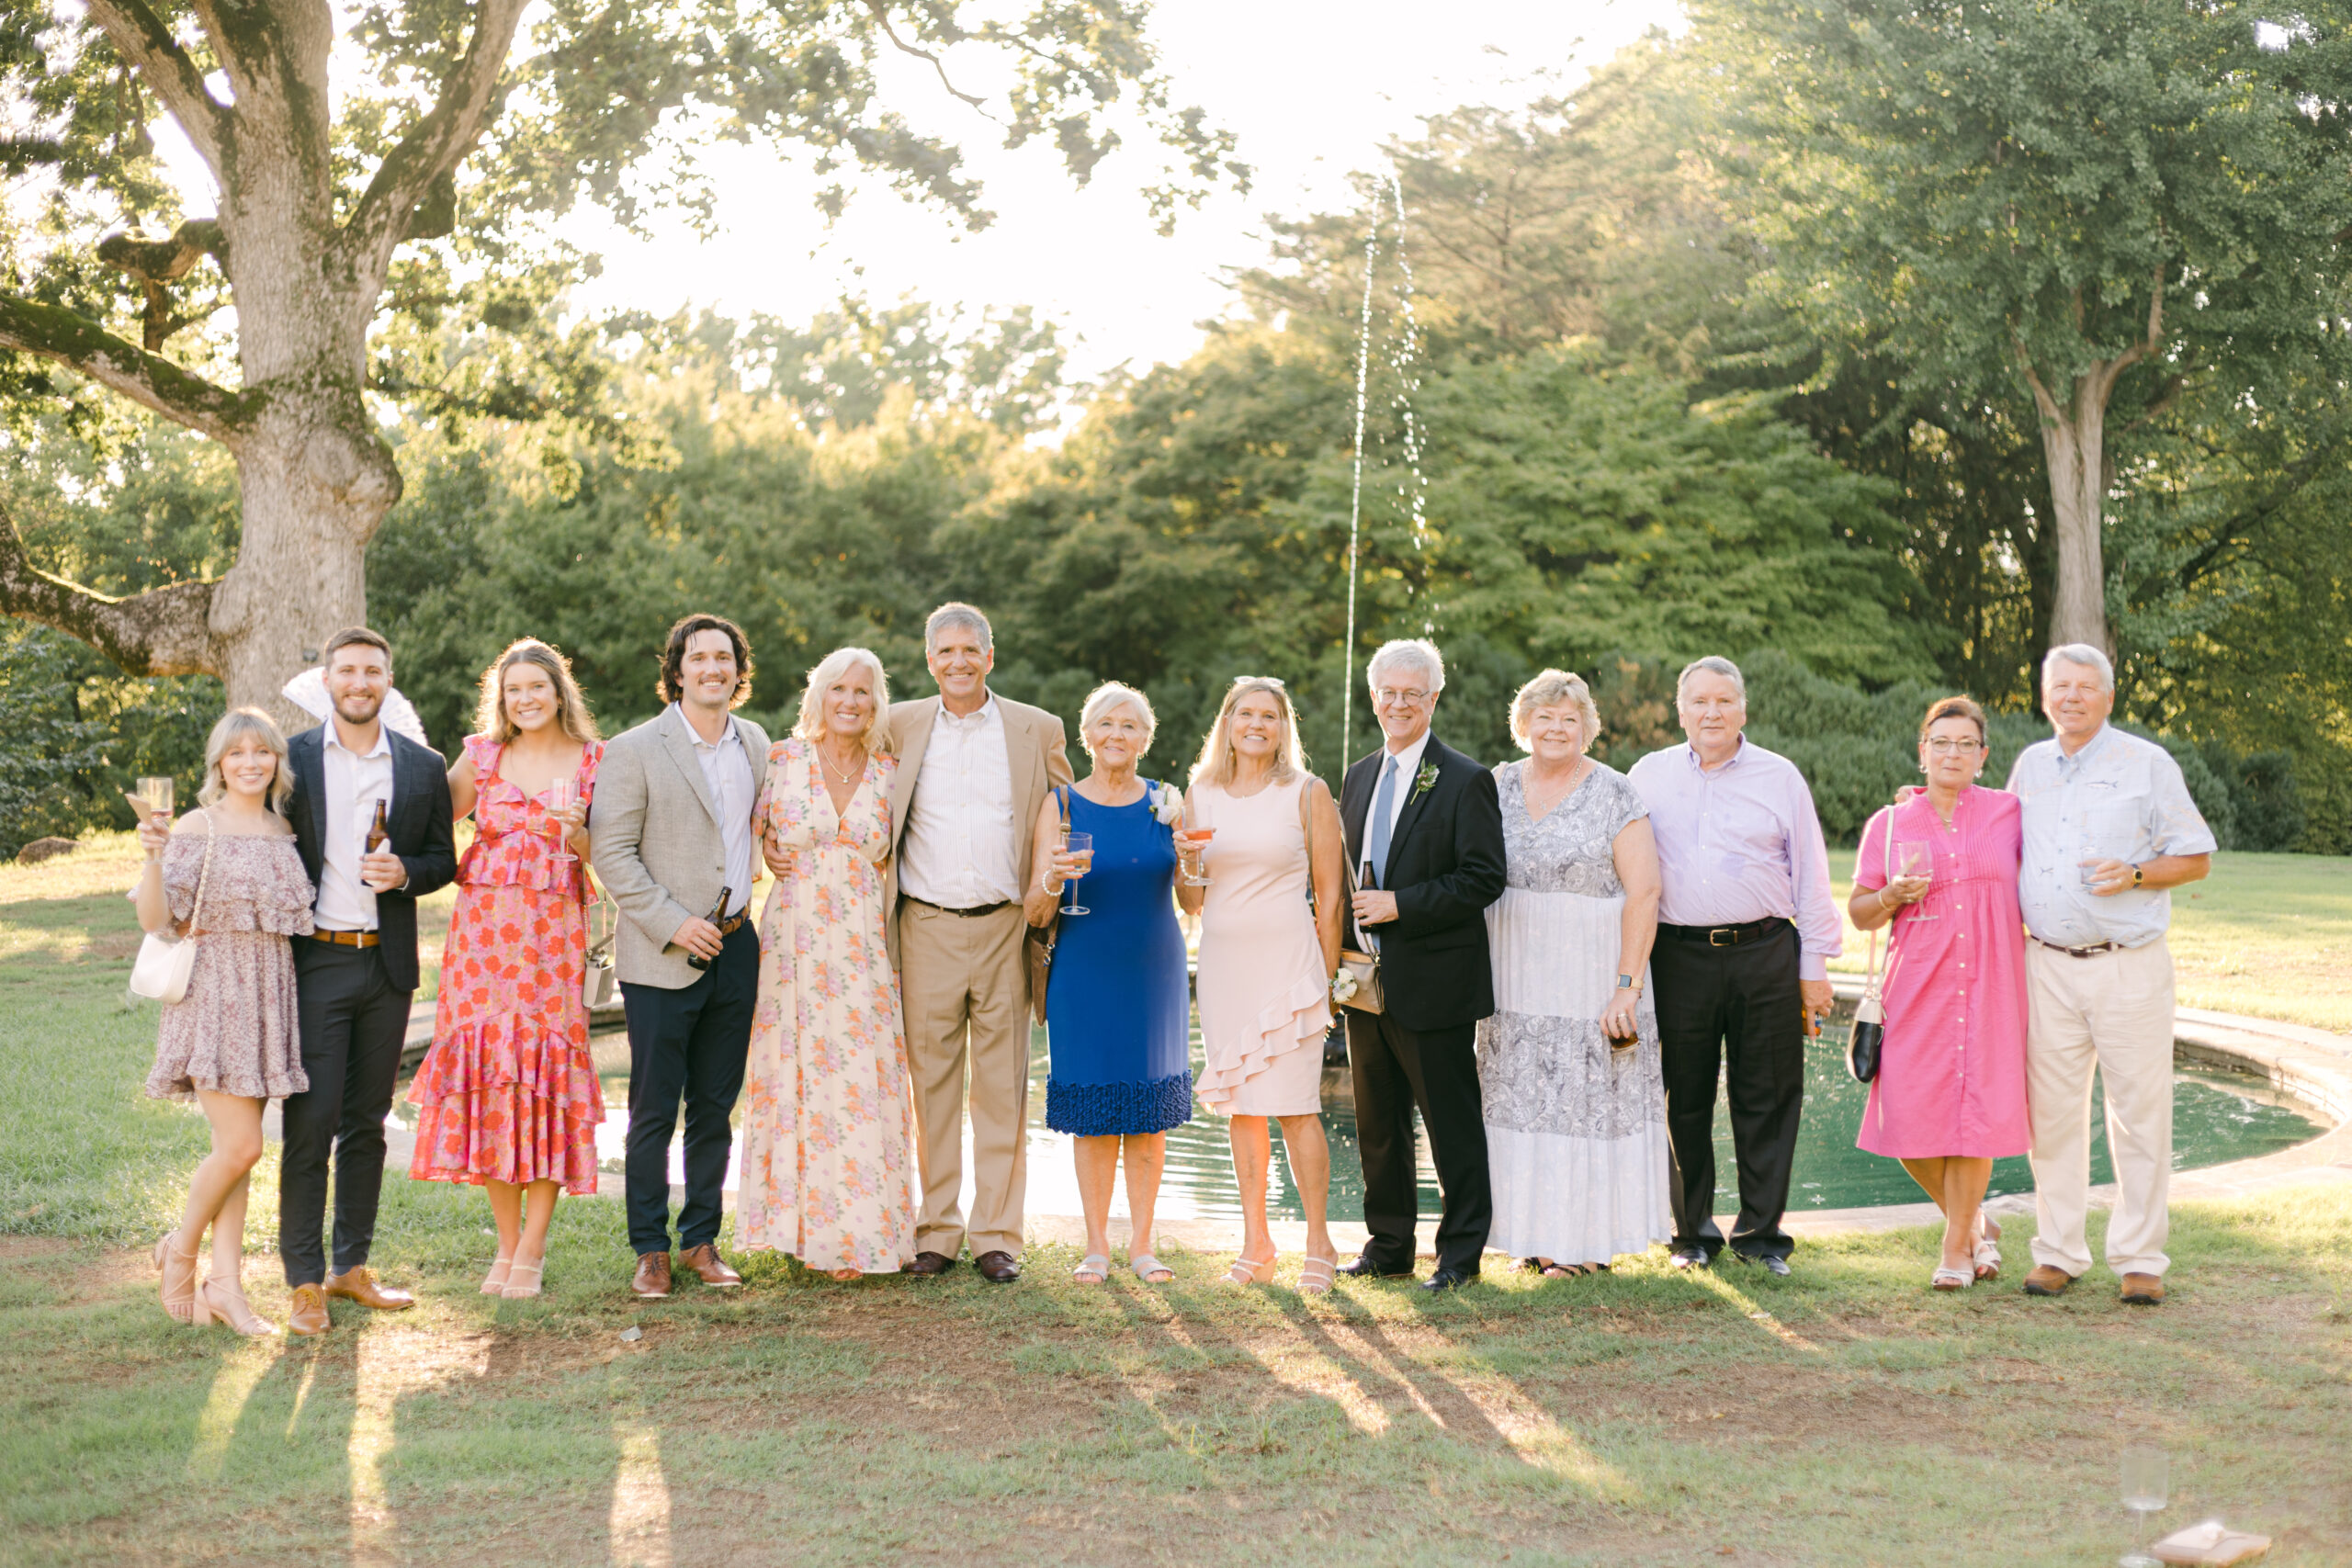 Family photo at Cheekwood wedding in Nashville, TN